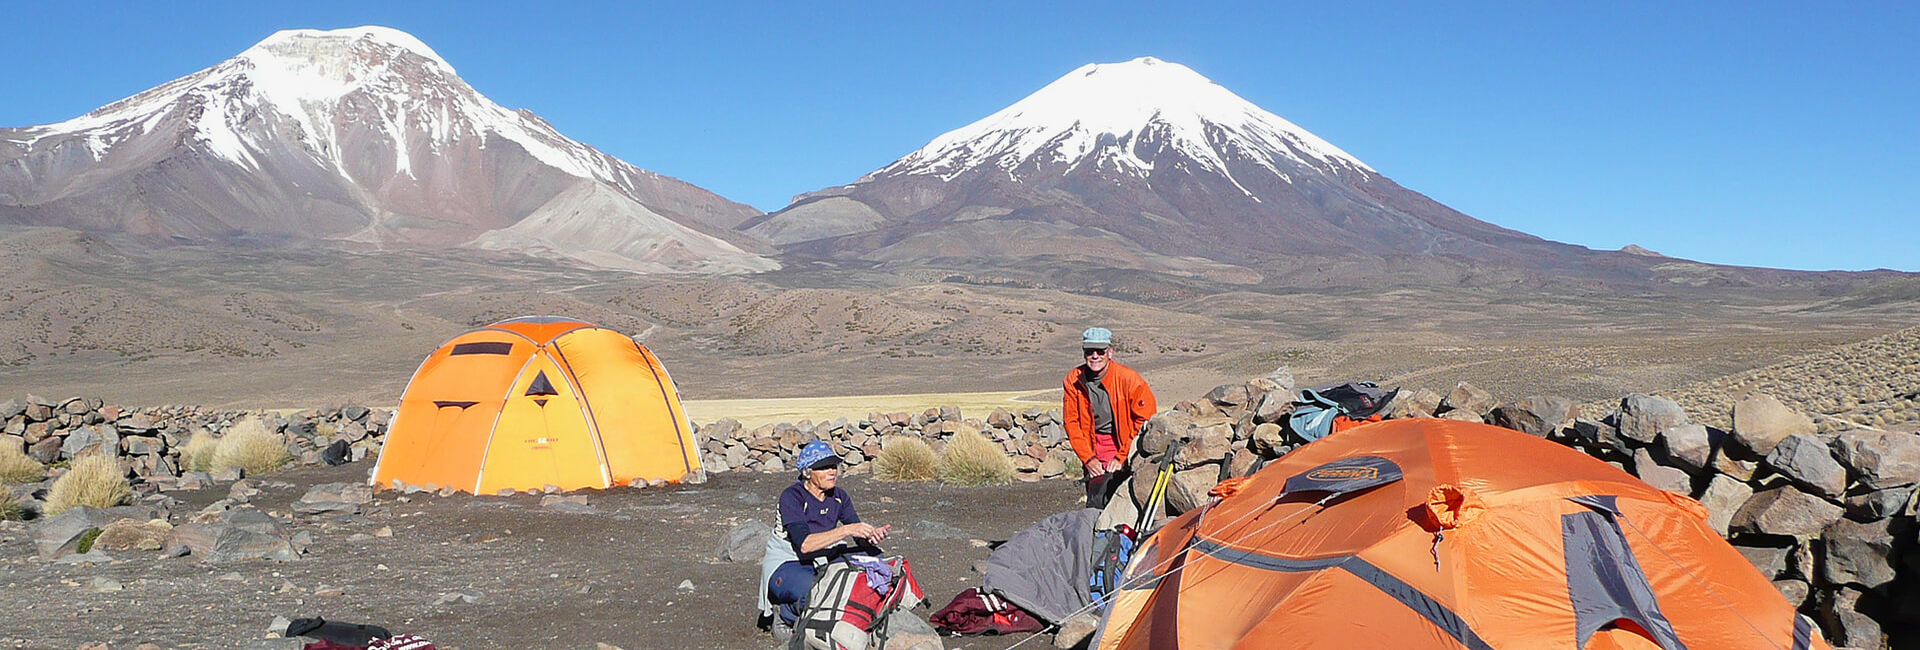 Camp near by Volcano Parinacota, Altiplano